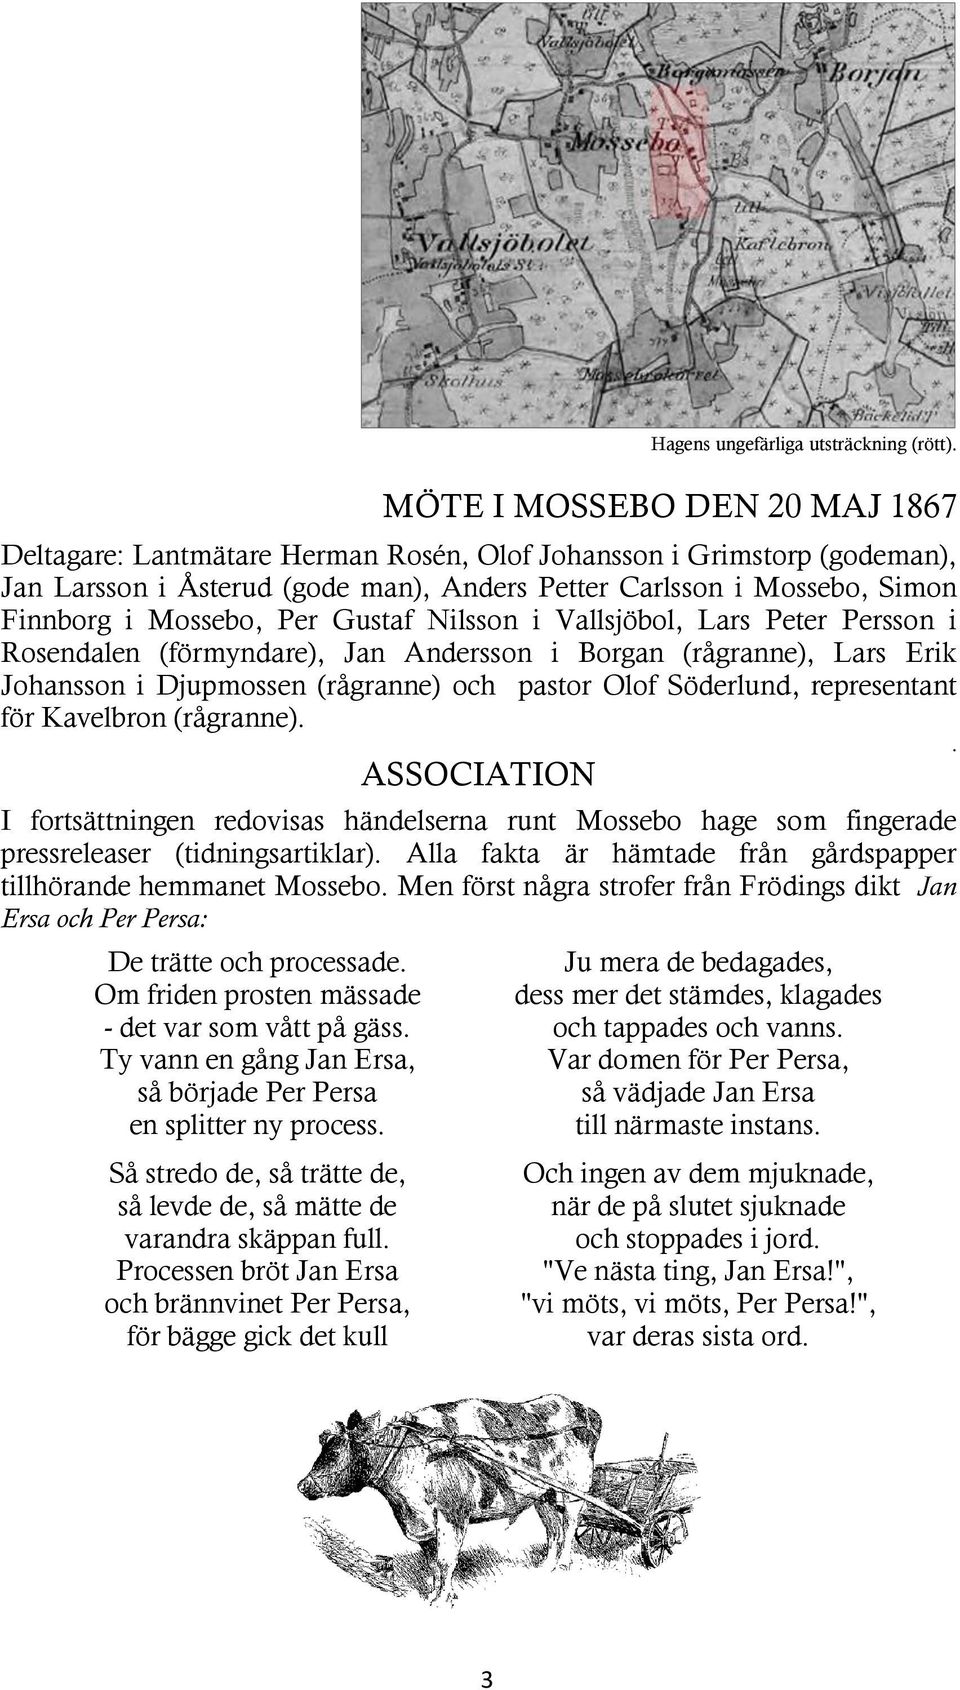 FEJDEN OM MOSSEBO HAGE - PDF Free Download